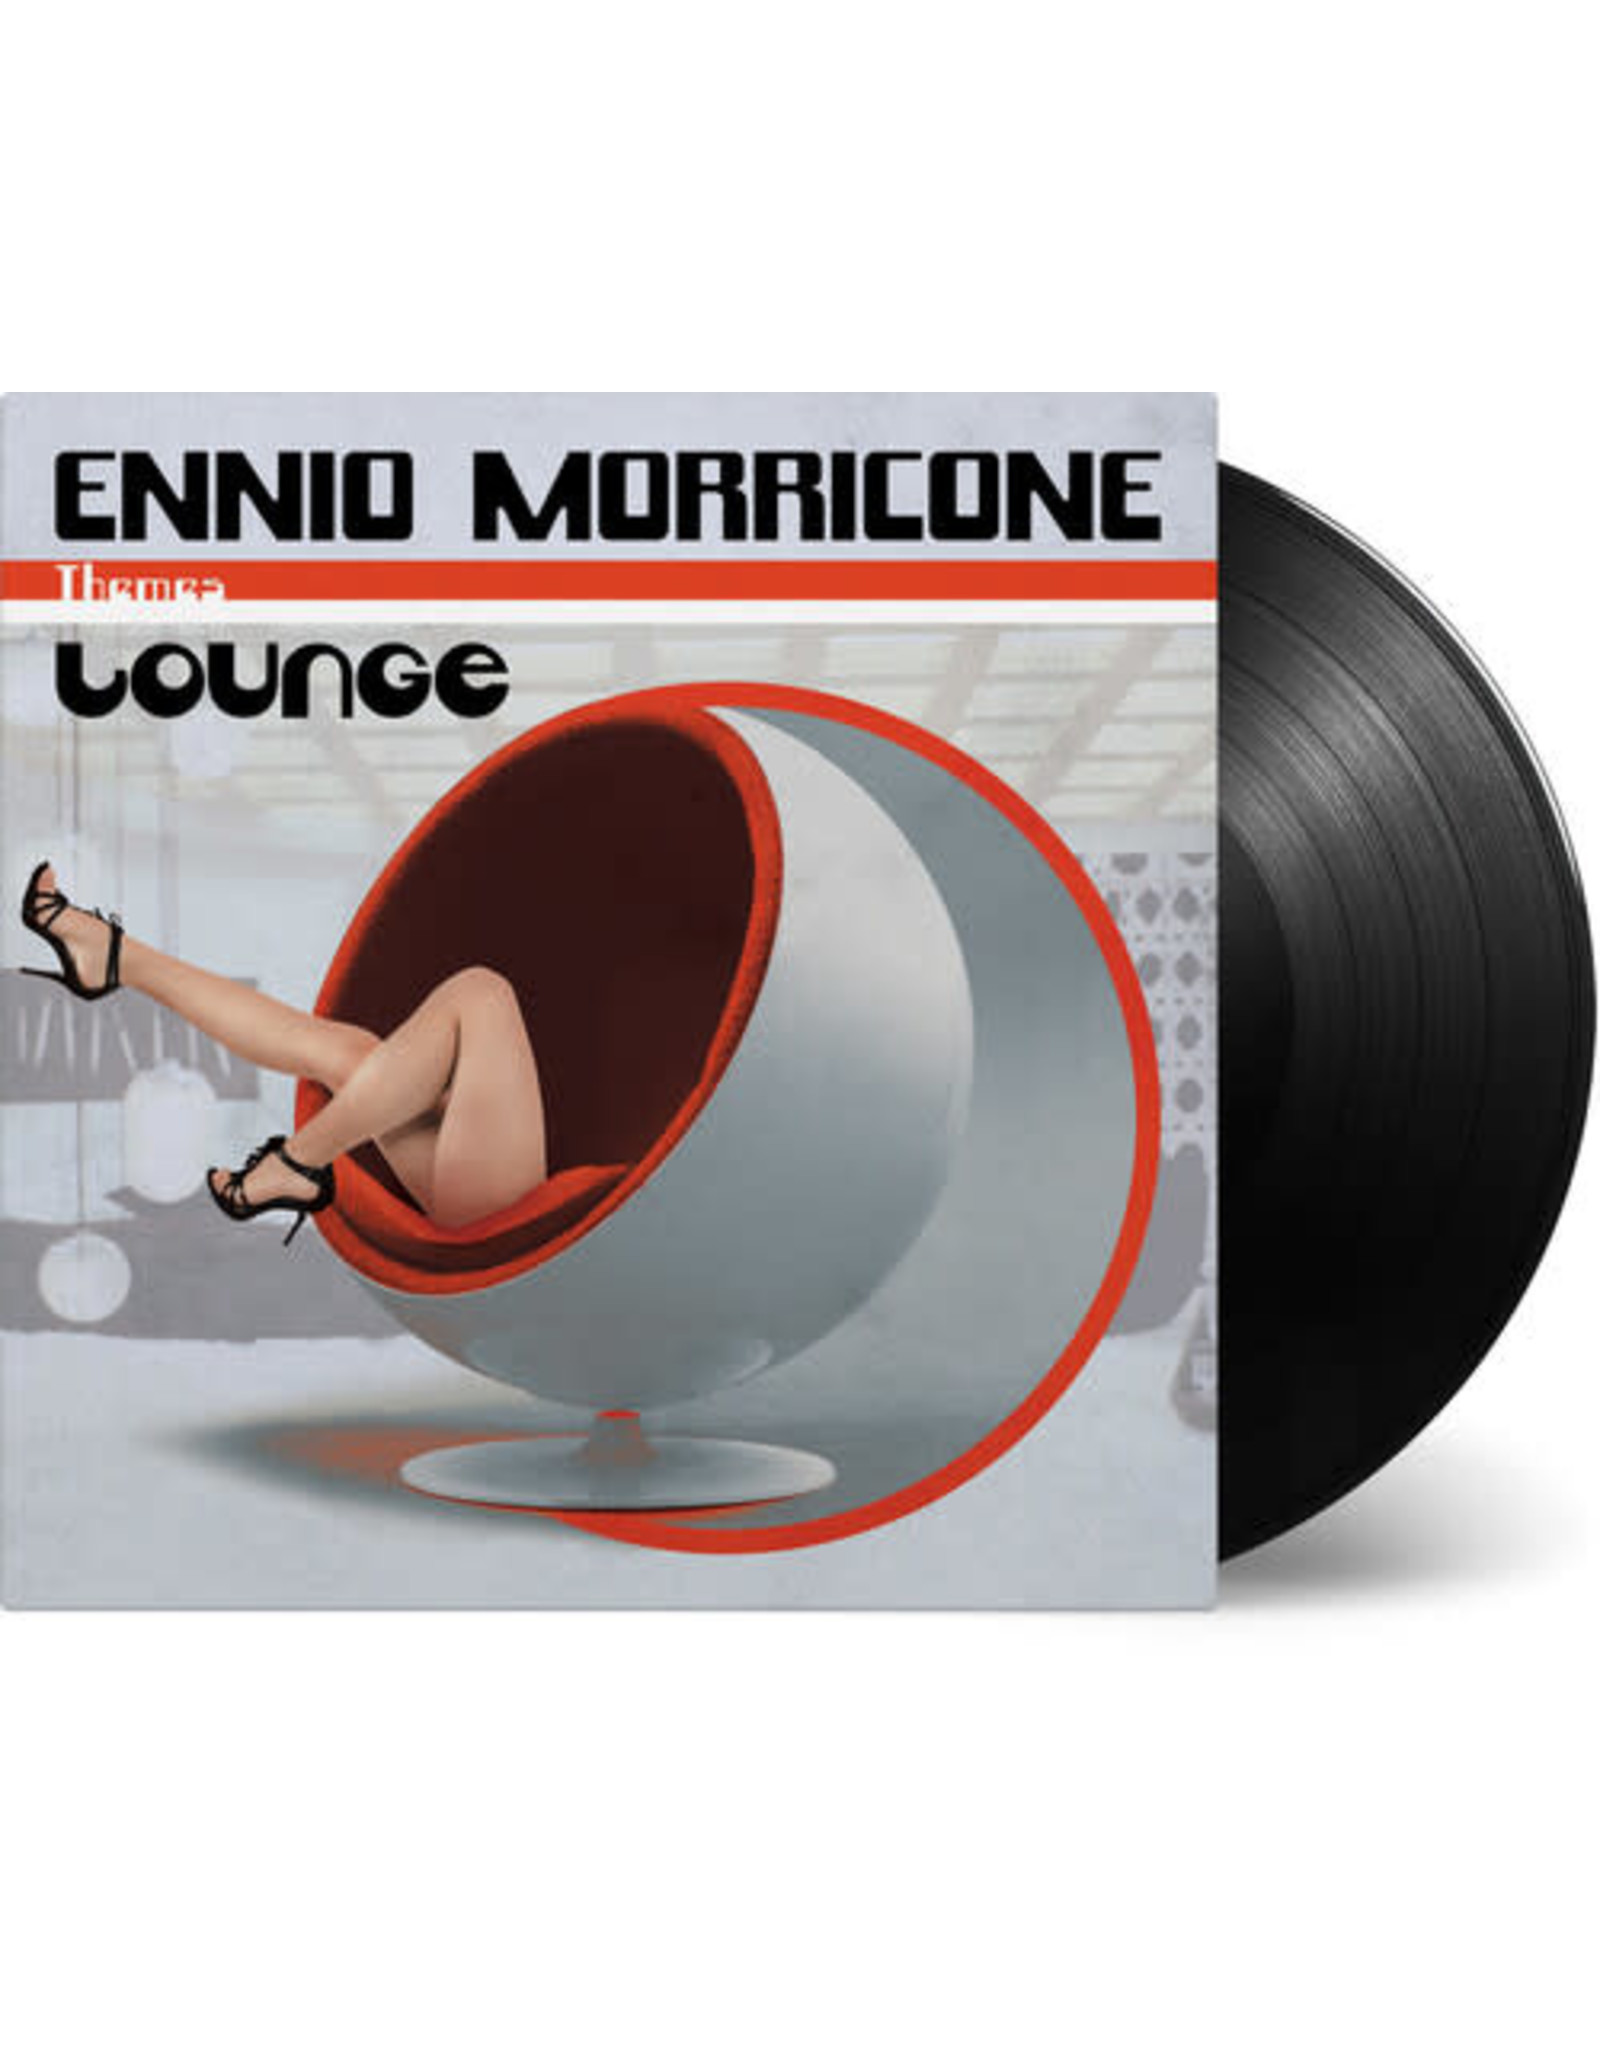 New Vinyl Ennio Morricone - Themes: Lounge 2LP